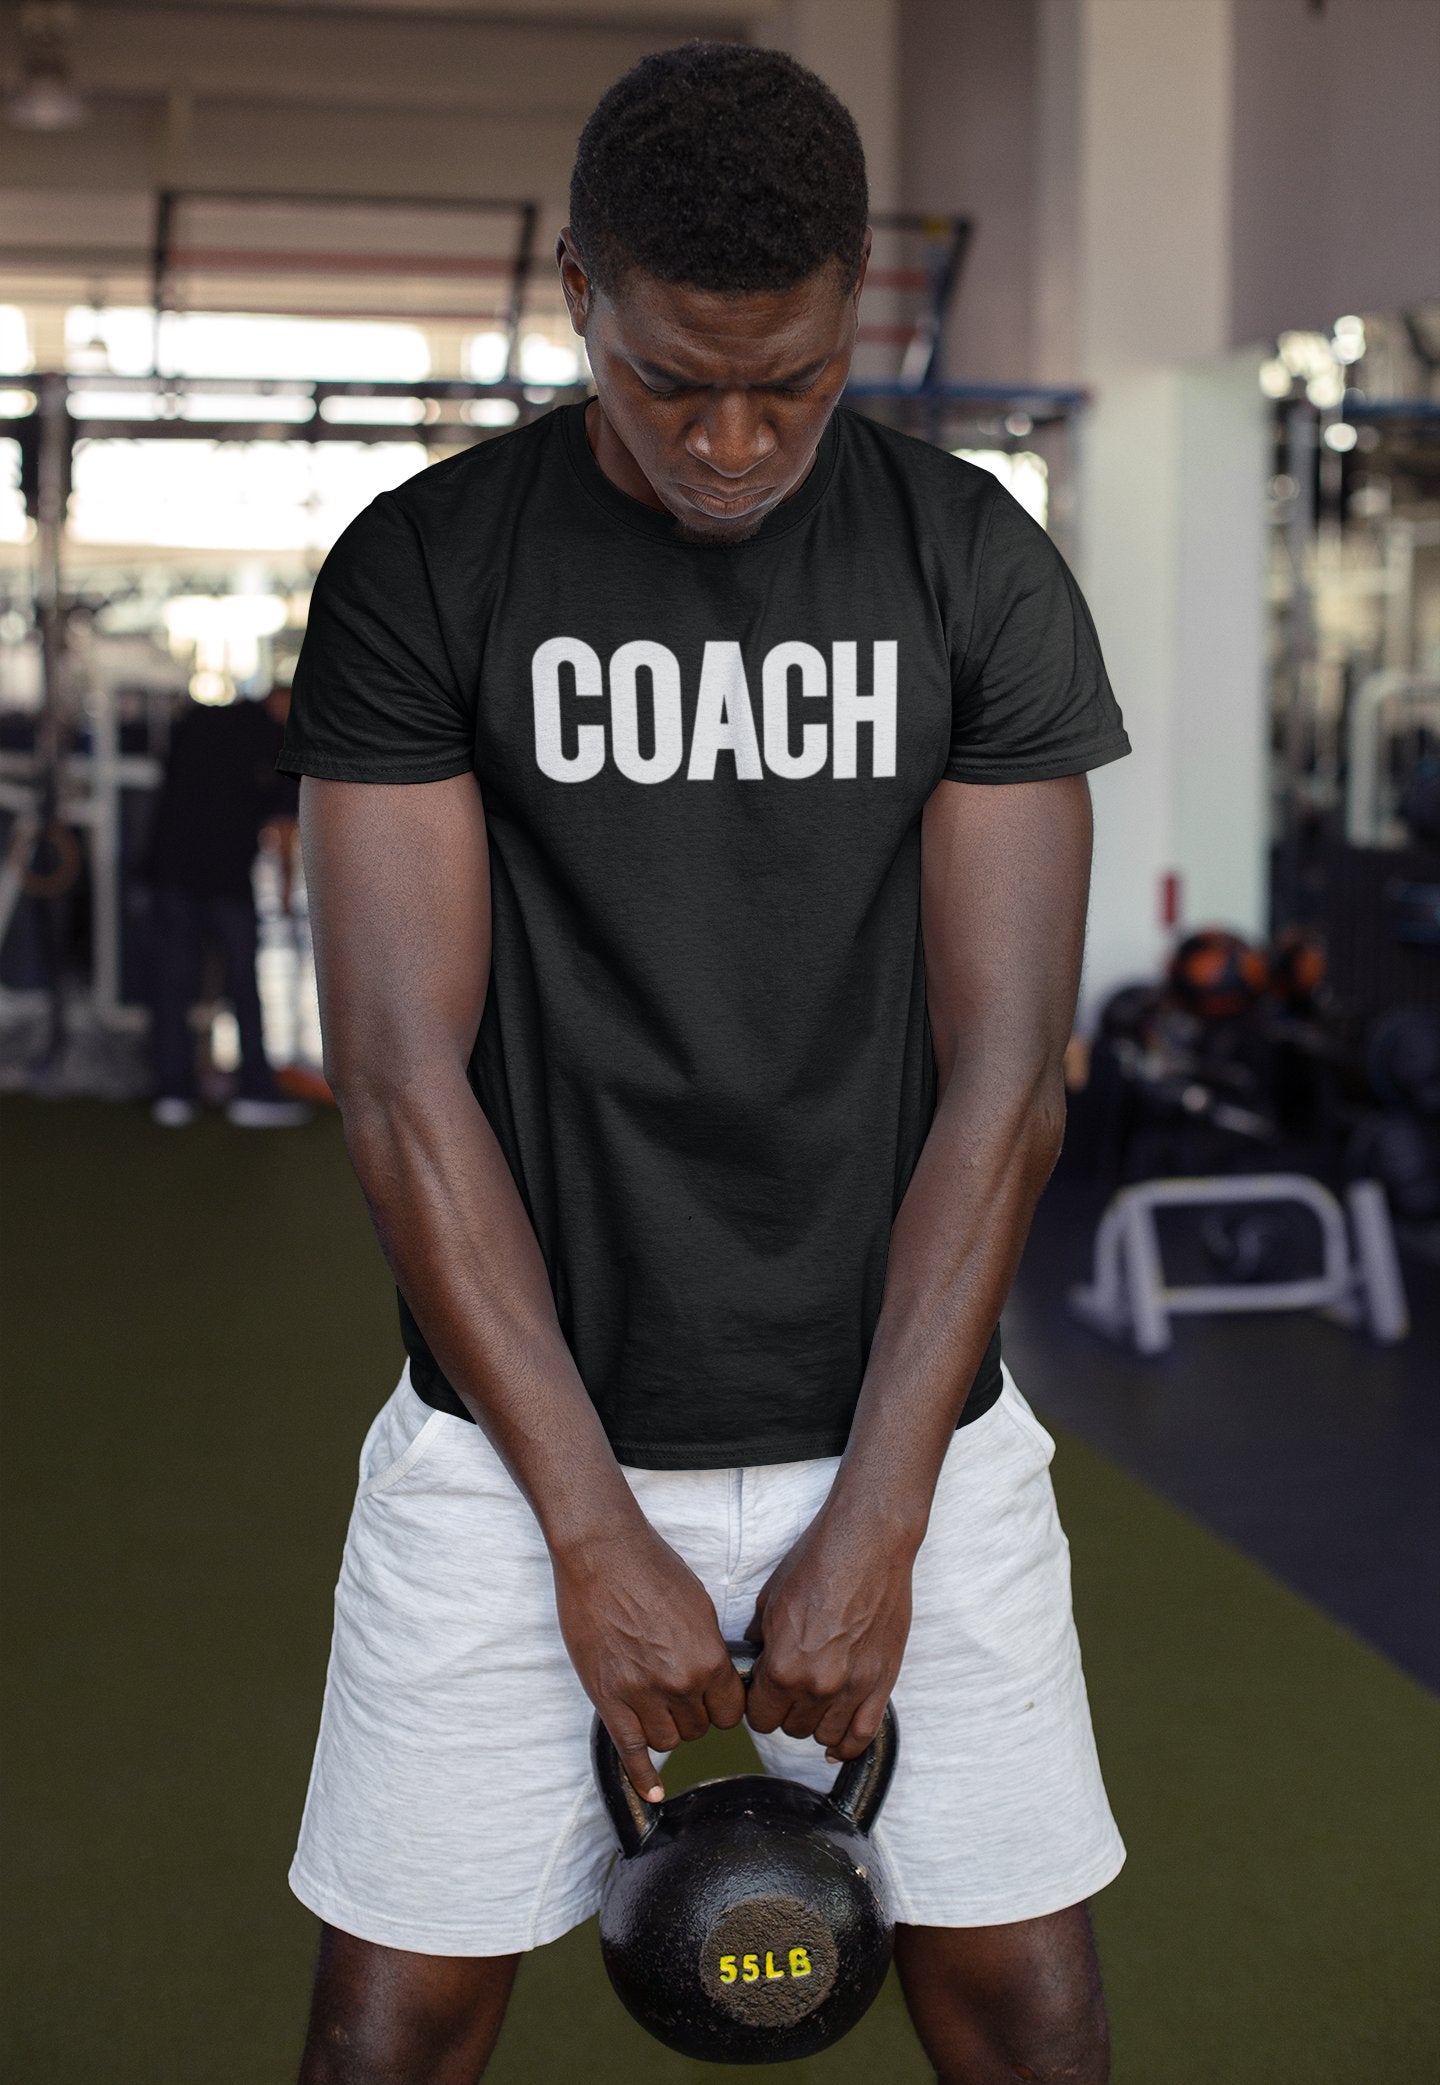 Coach Men's T-Shirt (Solid Design, Charcoal & White)